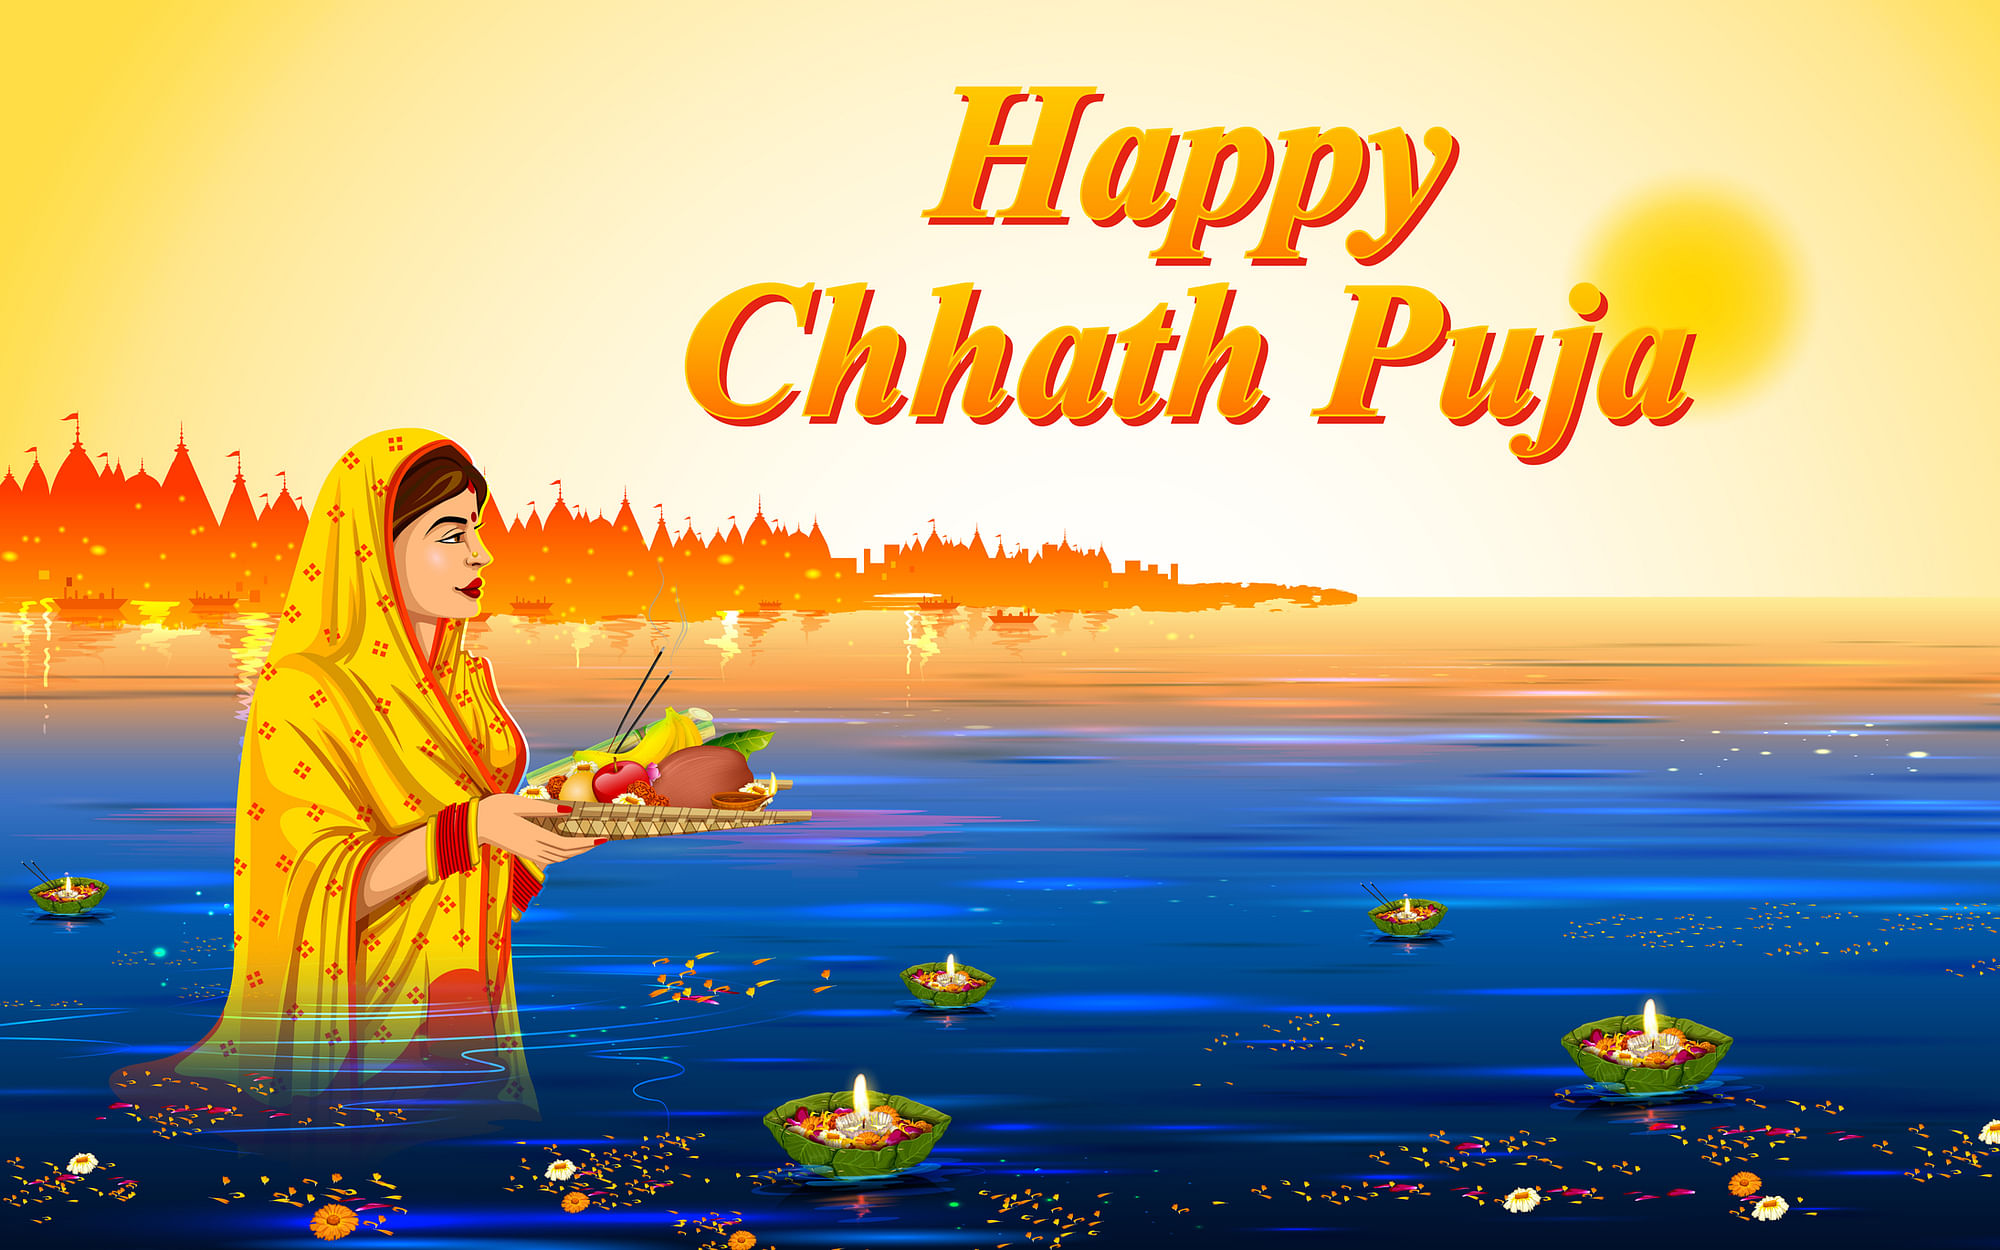 Happy Chhath Puja 2020